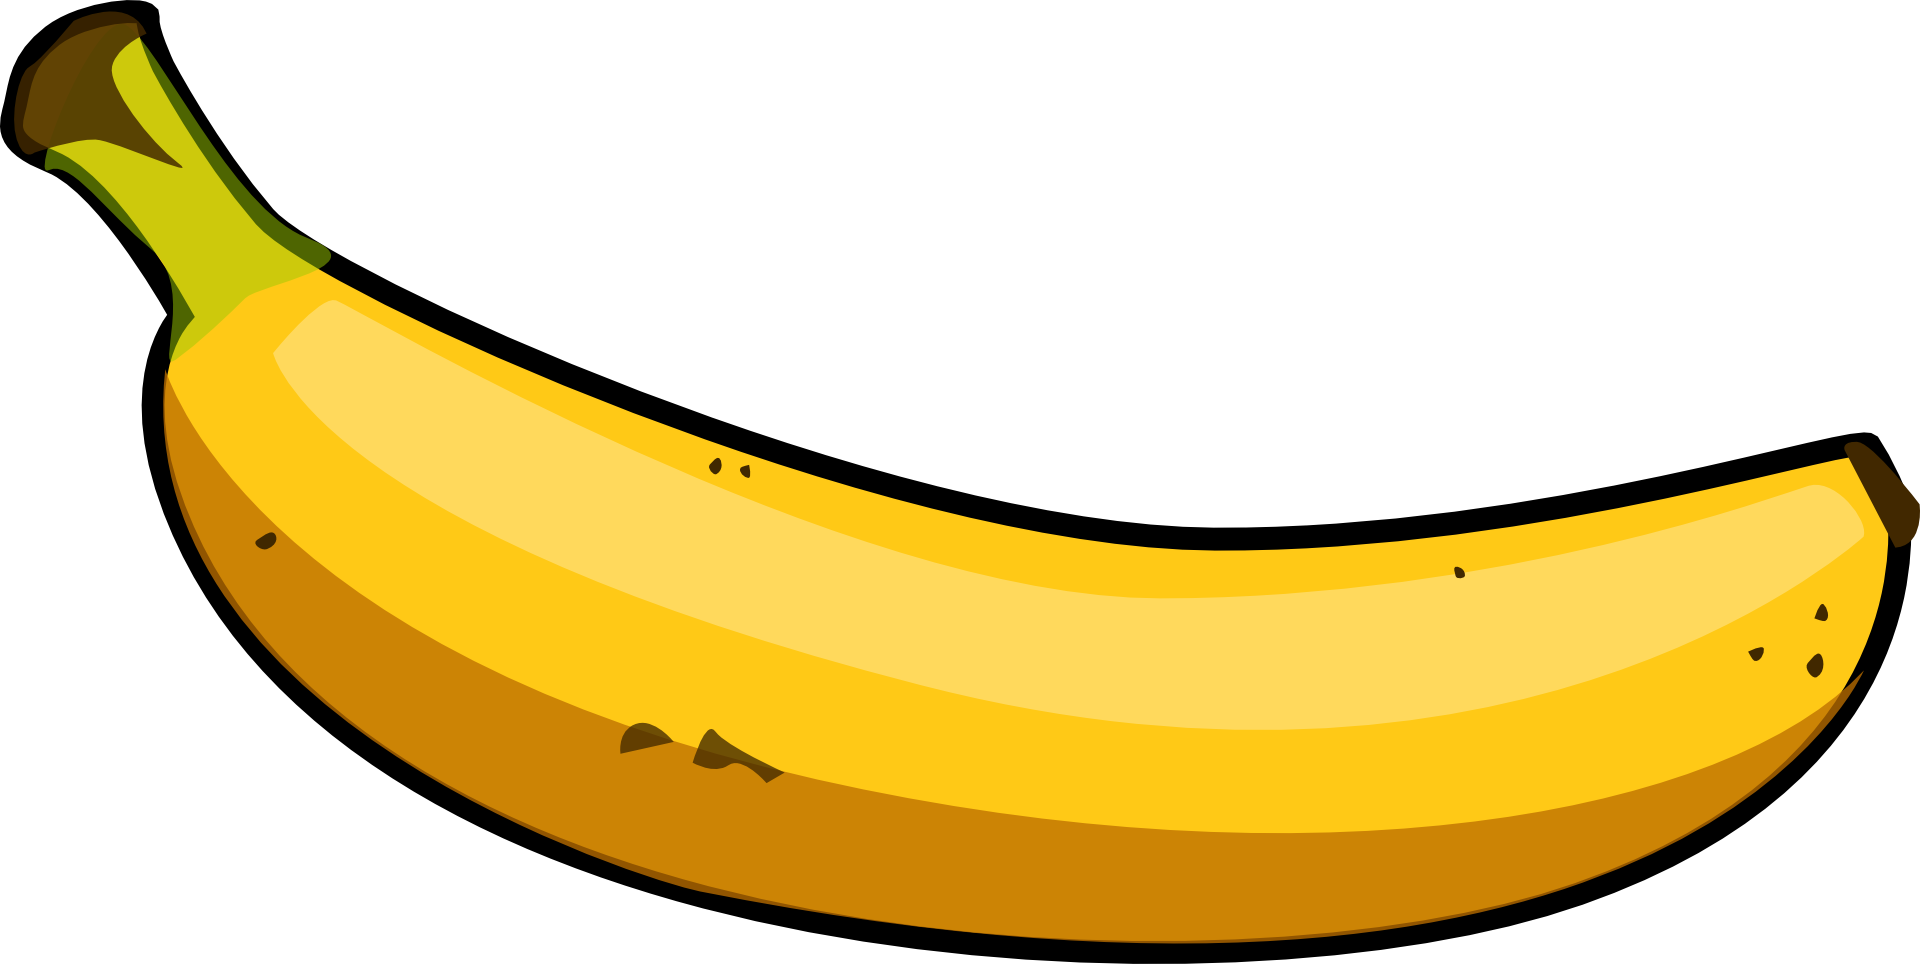 Download Banana Fruit Cartoon HQ PNG Image | FreePNGImg